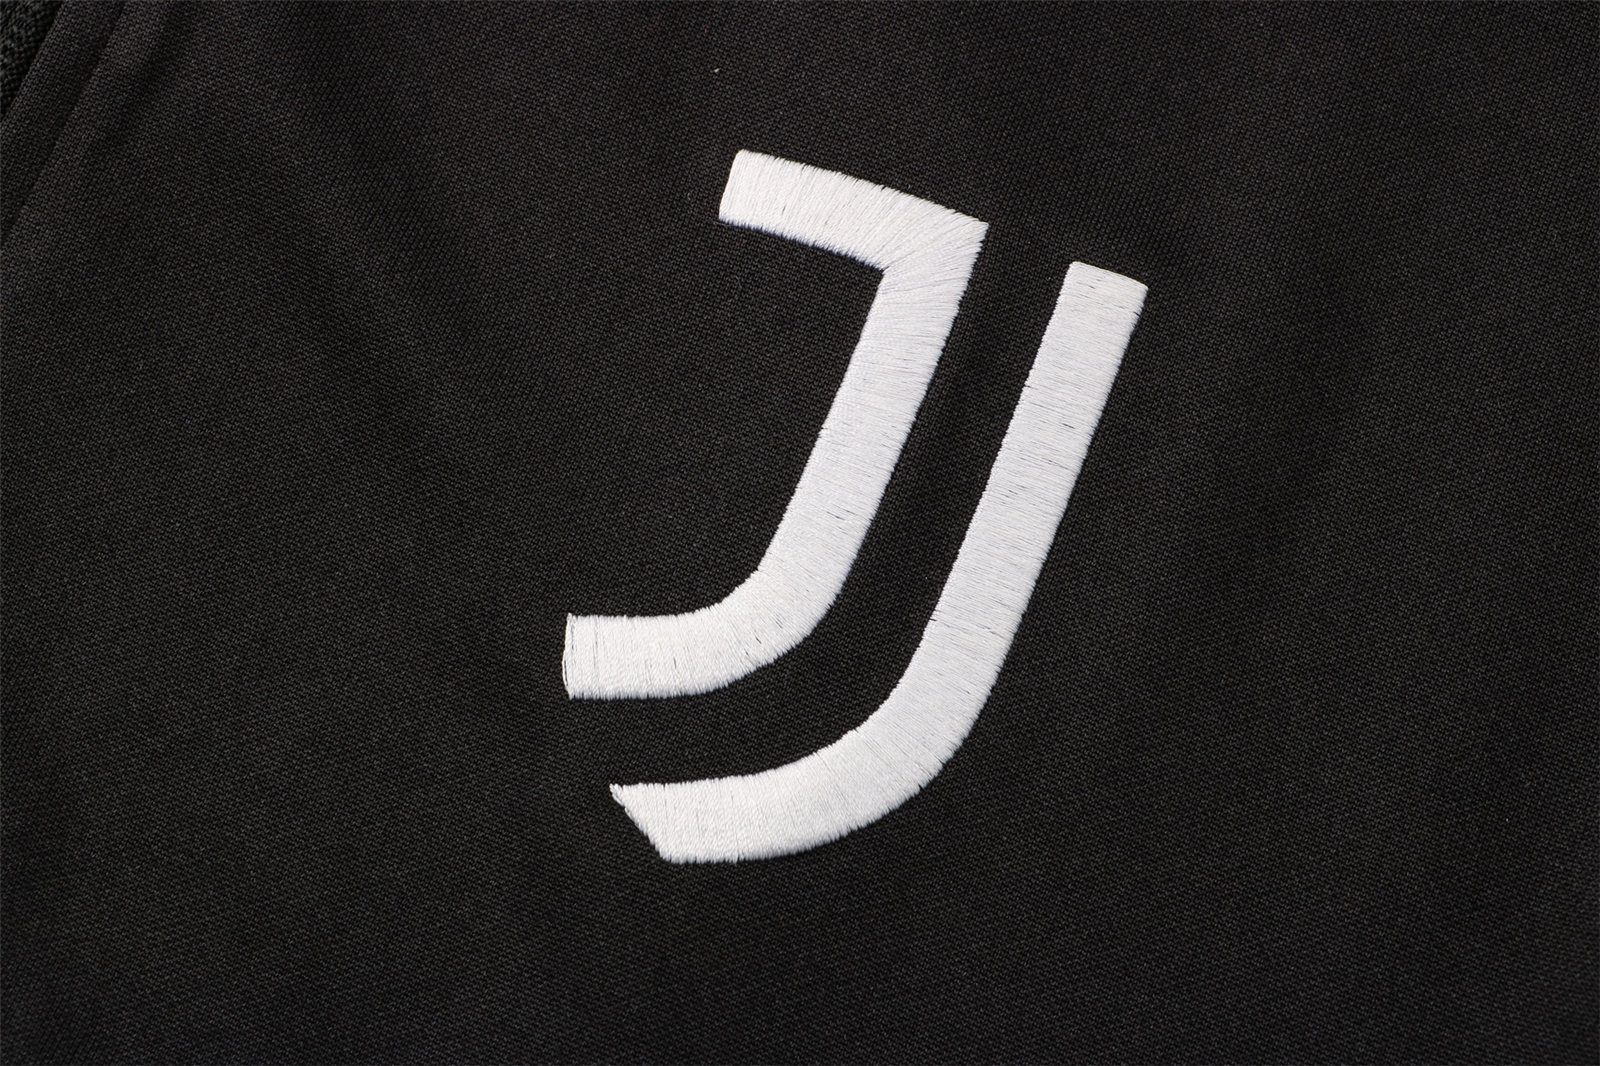 Juventus Soccer Training Suit Jacket + Pants Replica Black - Grey Mens 2021/22